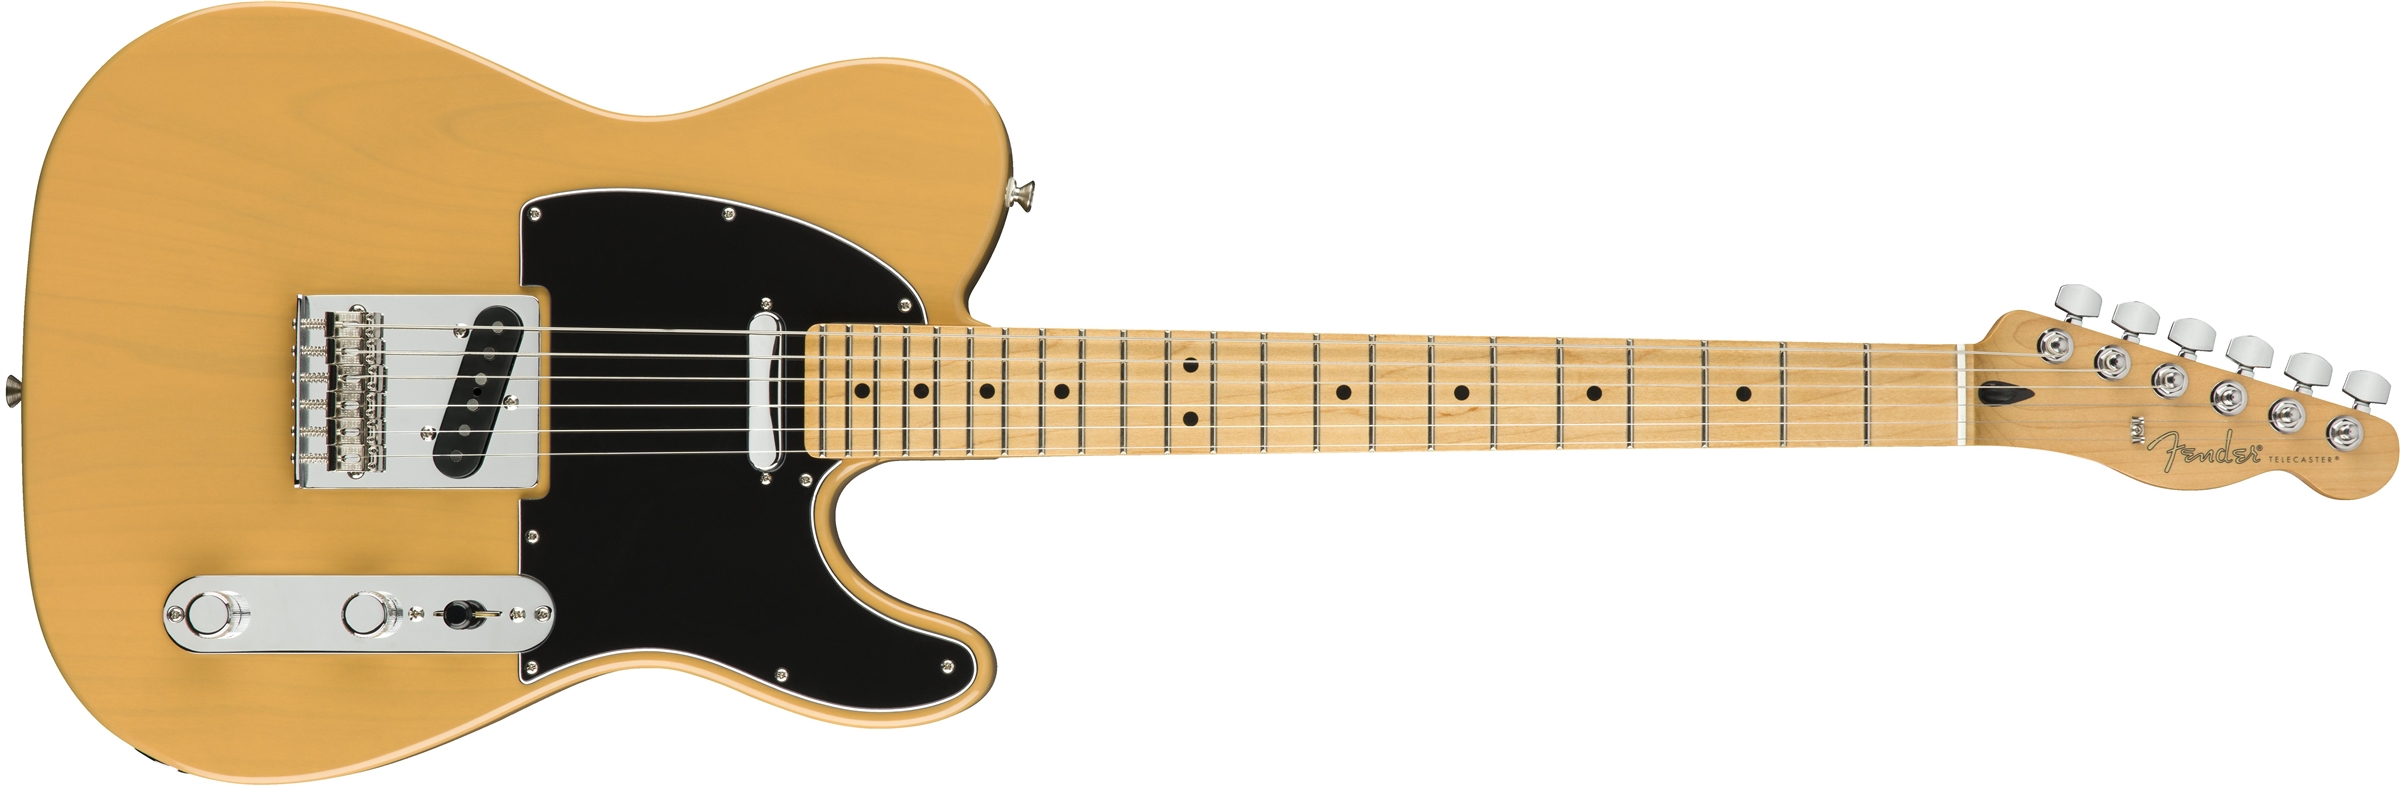 Fender Tele Player Mex Mn - Butterscotch Blonde - Guitarra eléctrica con forma de tel - Variation 1